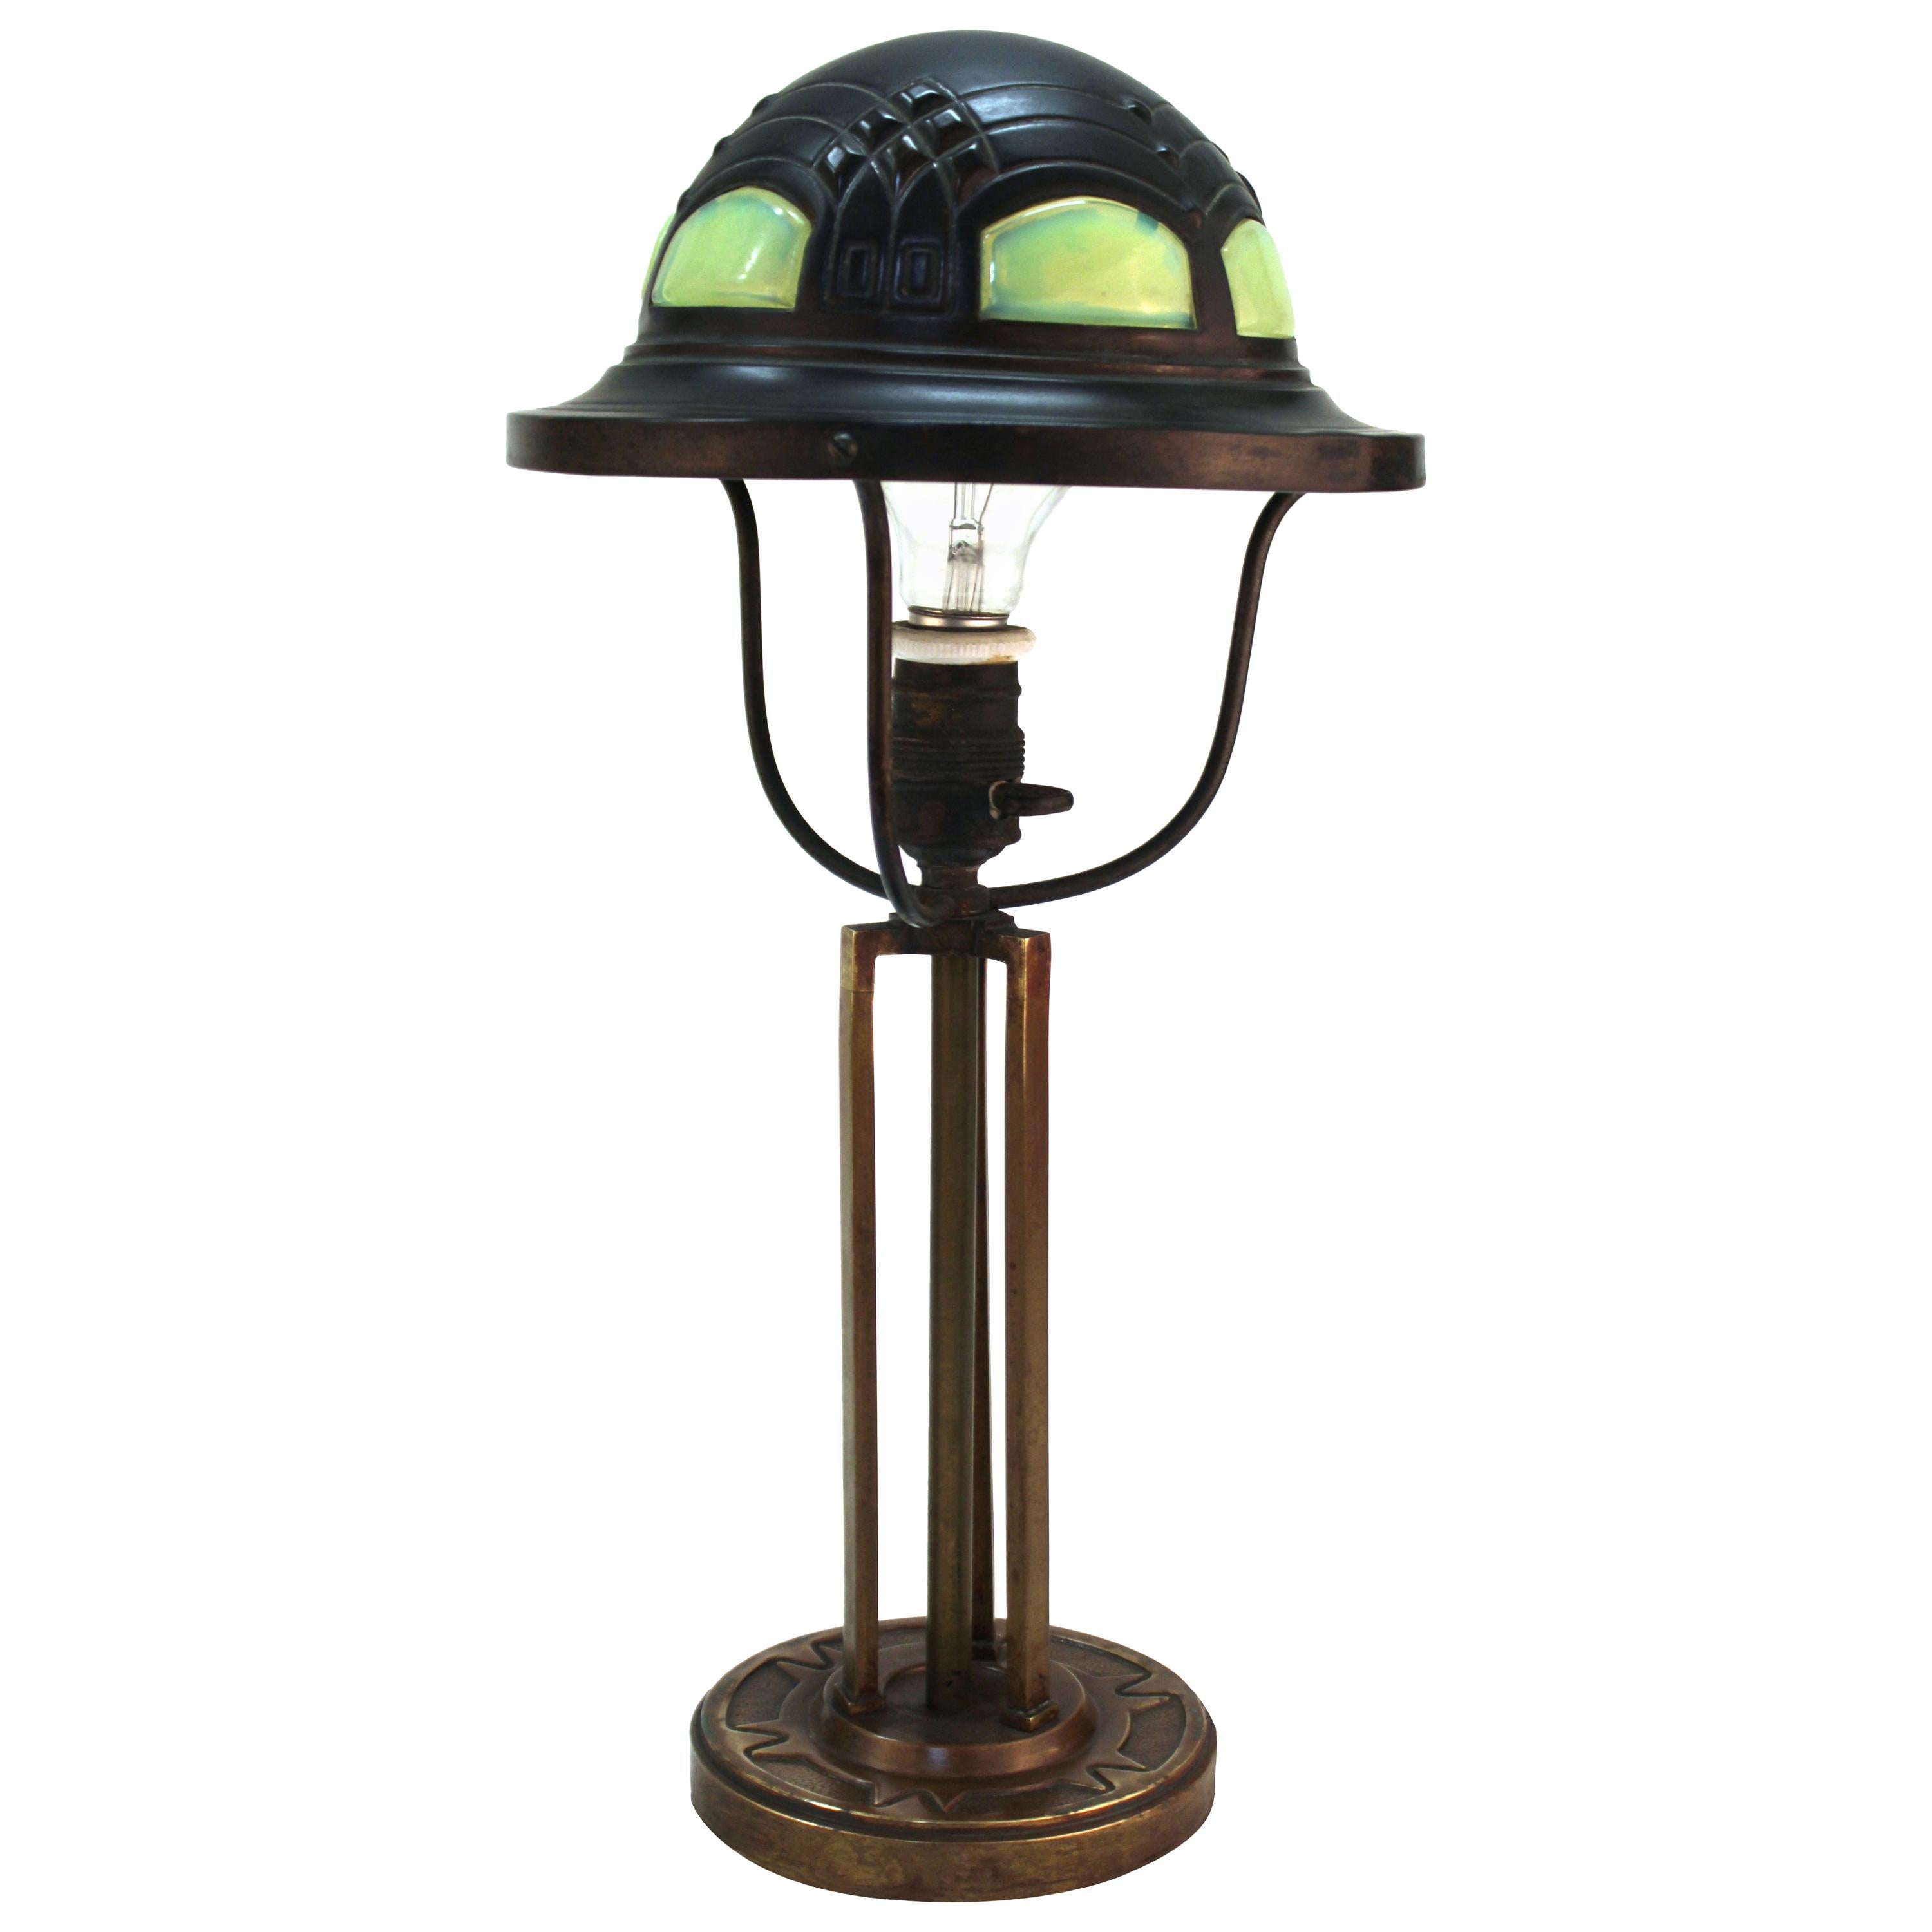 German Darmstadt Jugendstil Table Lamp Attributed to Peter Behrens